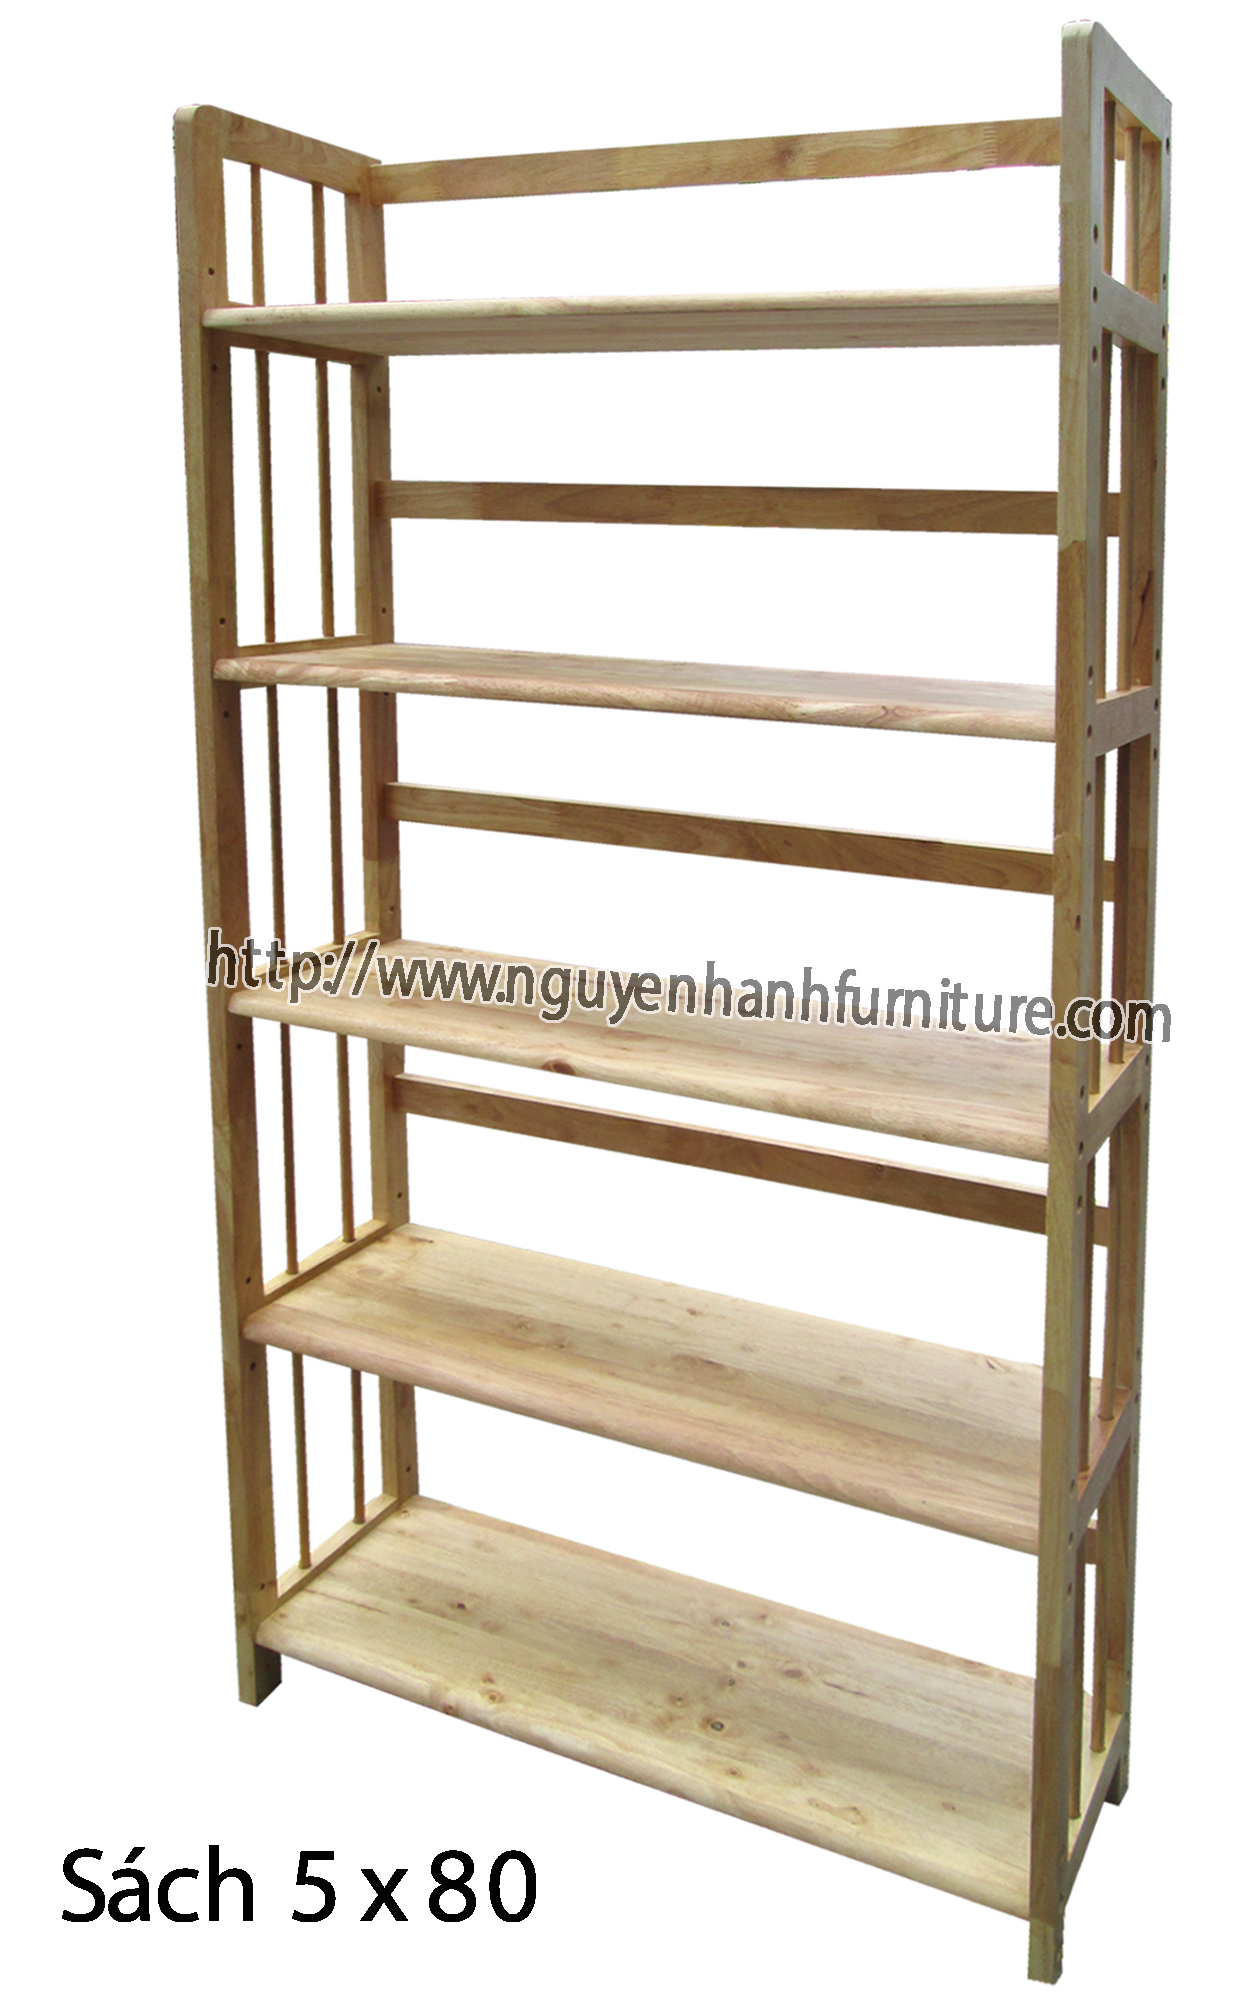 Name product: 5 storey Adjustable Bookshelf 80 (Natural)- Dimensions: 80 x 28 x 157 (H) - Description: Wood natural rubber